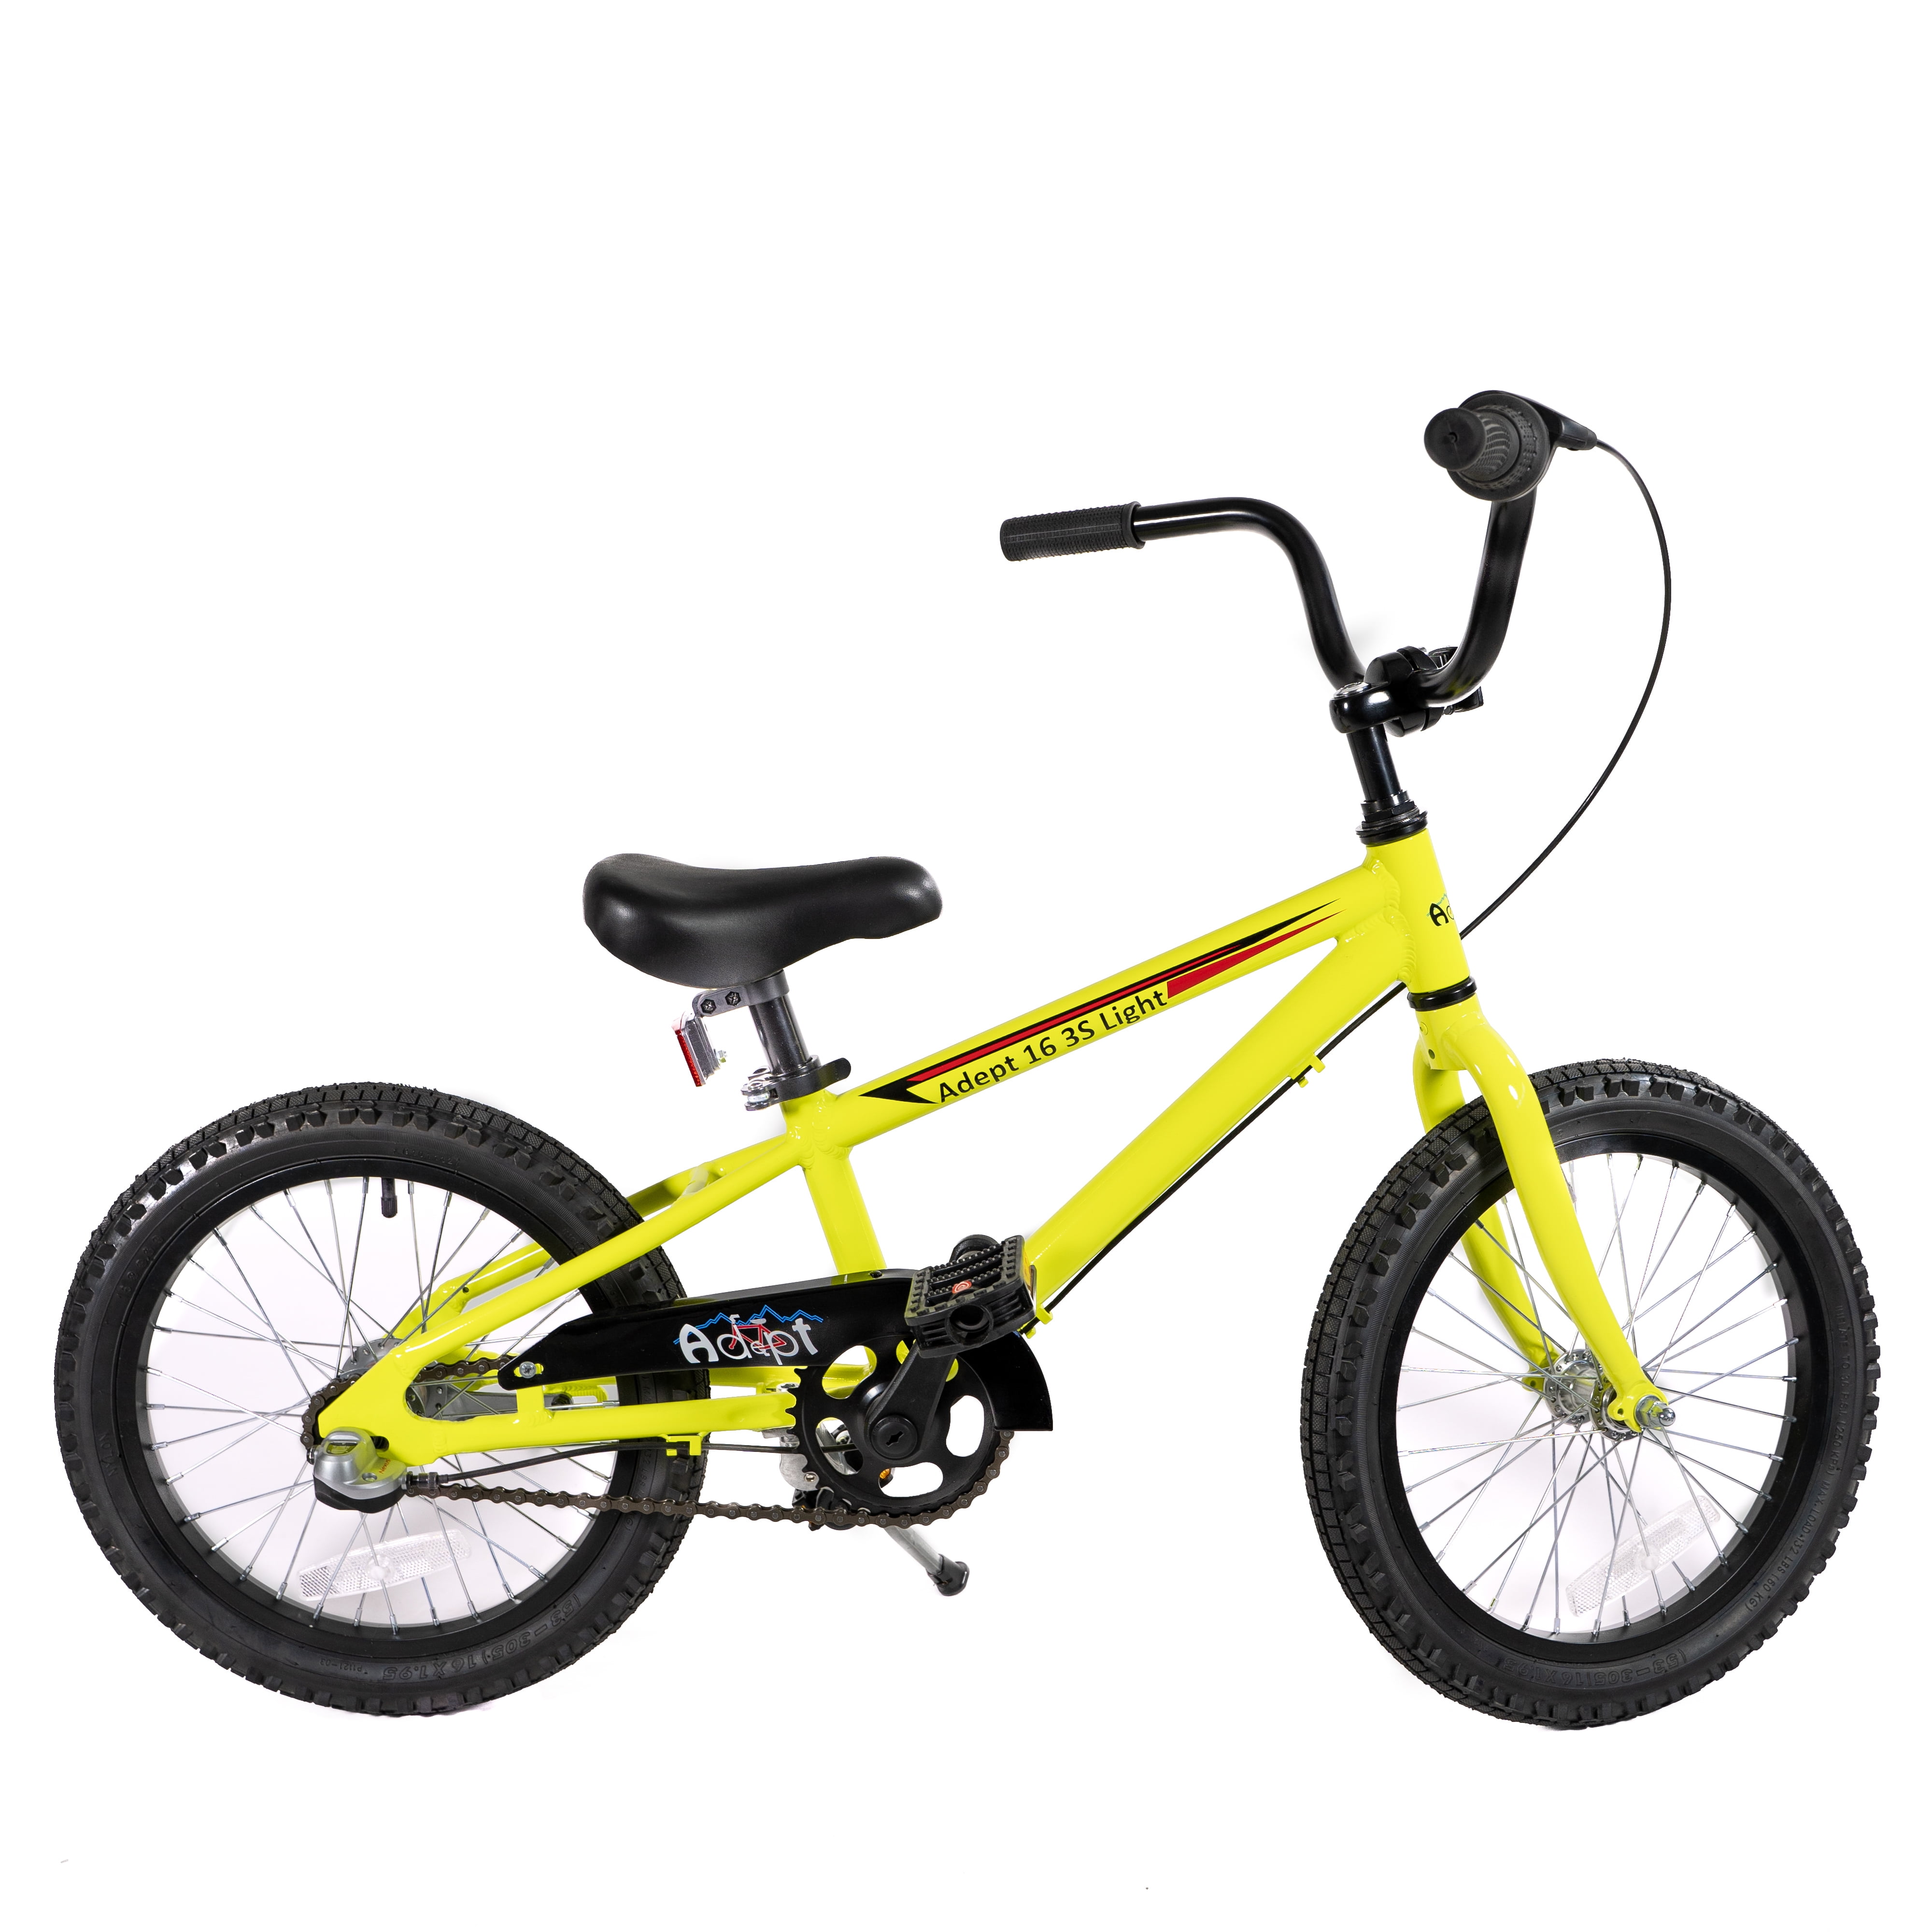 Outlet Bicicleta Infantil Husqvarna Para Niños 2-5 Años 3Hs22002950X